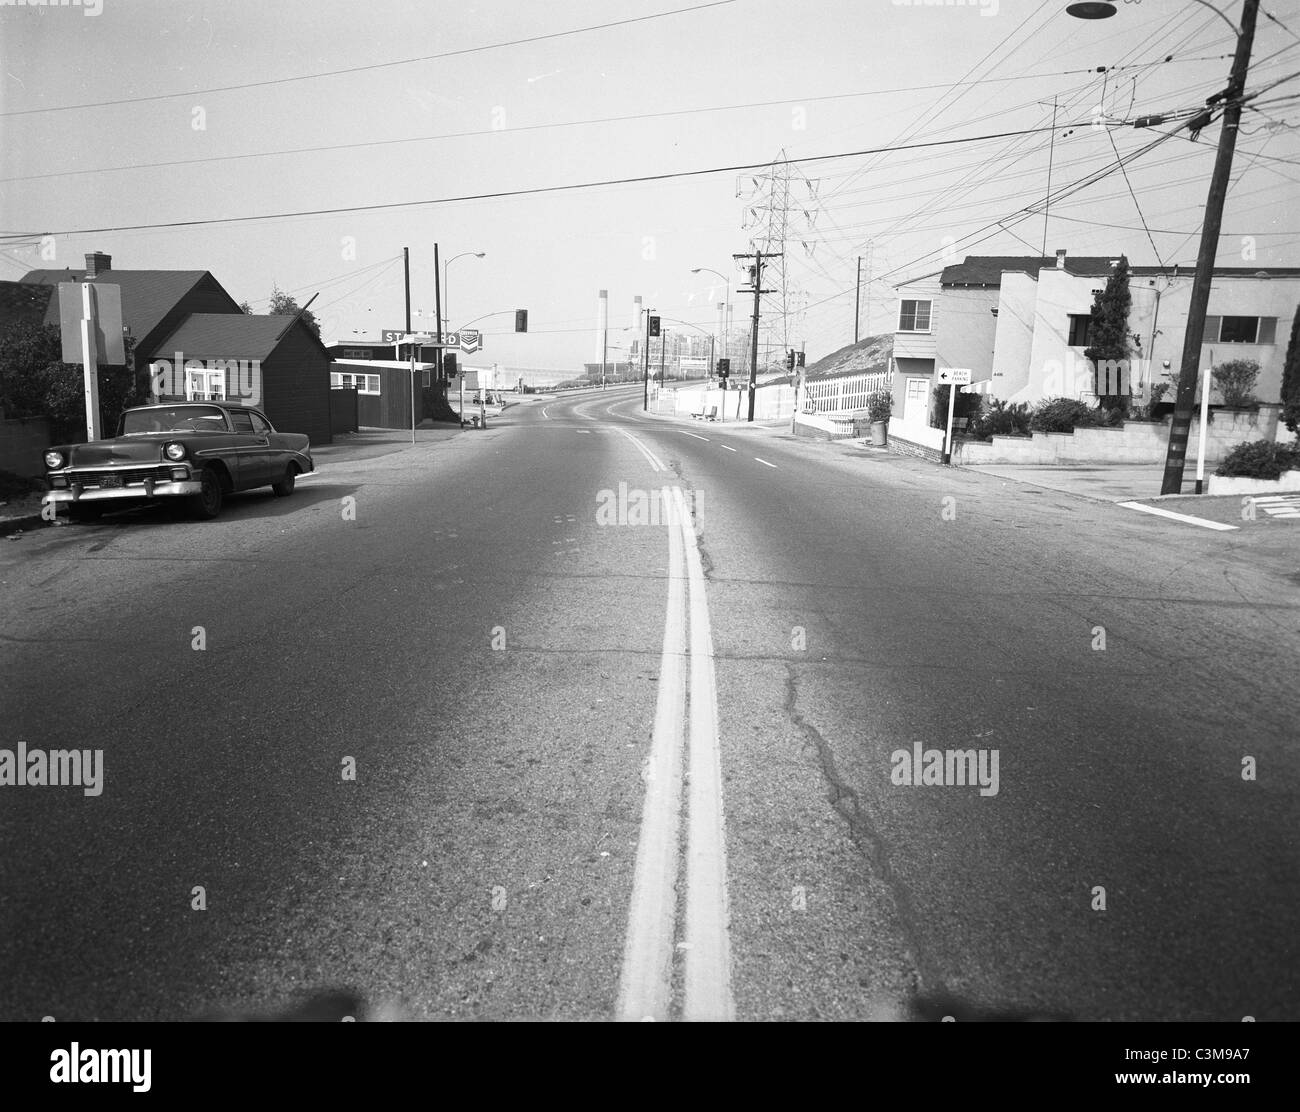 Driving West Los Angeles Century City (Empty City Street Scene